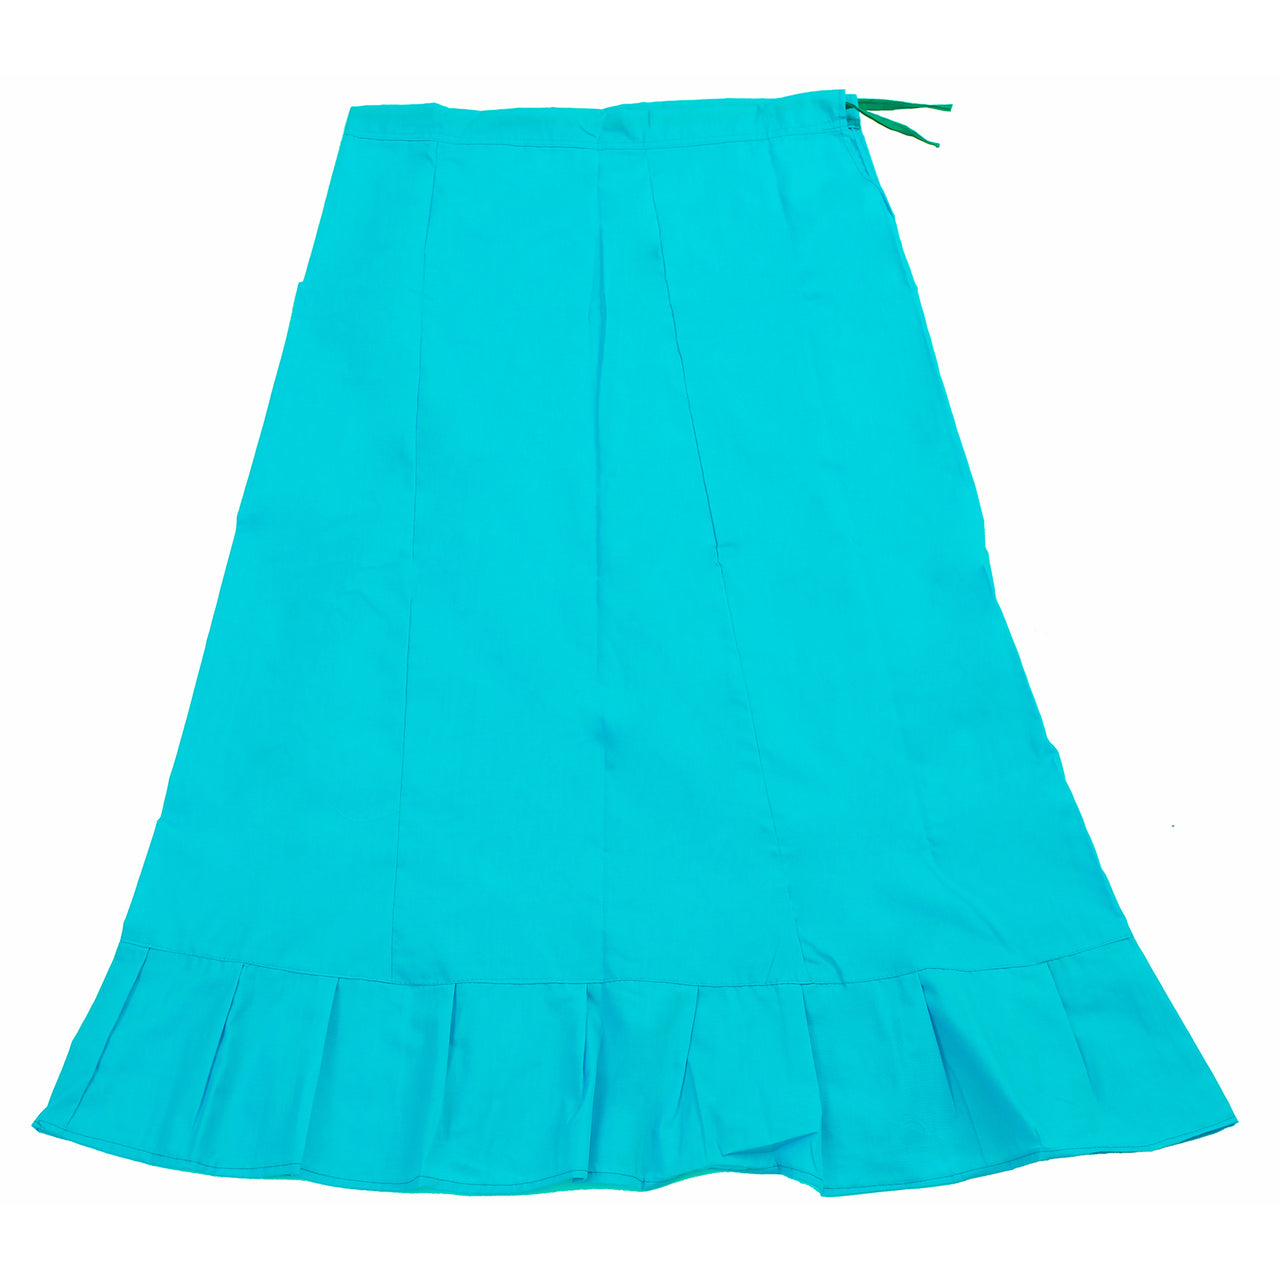 https://cdn.shopify.com/s/files/1/0708/6938/5510/products/Sari-Petticoat-The-Fabric-Centre-Turquoise-Skirt-1_f9e6aece-f898-4428-91c6-276bb5738a34.jpg?v=1678404020&width=1280